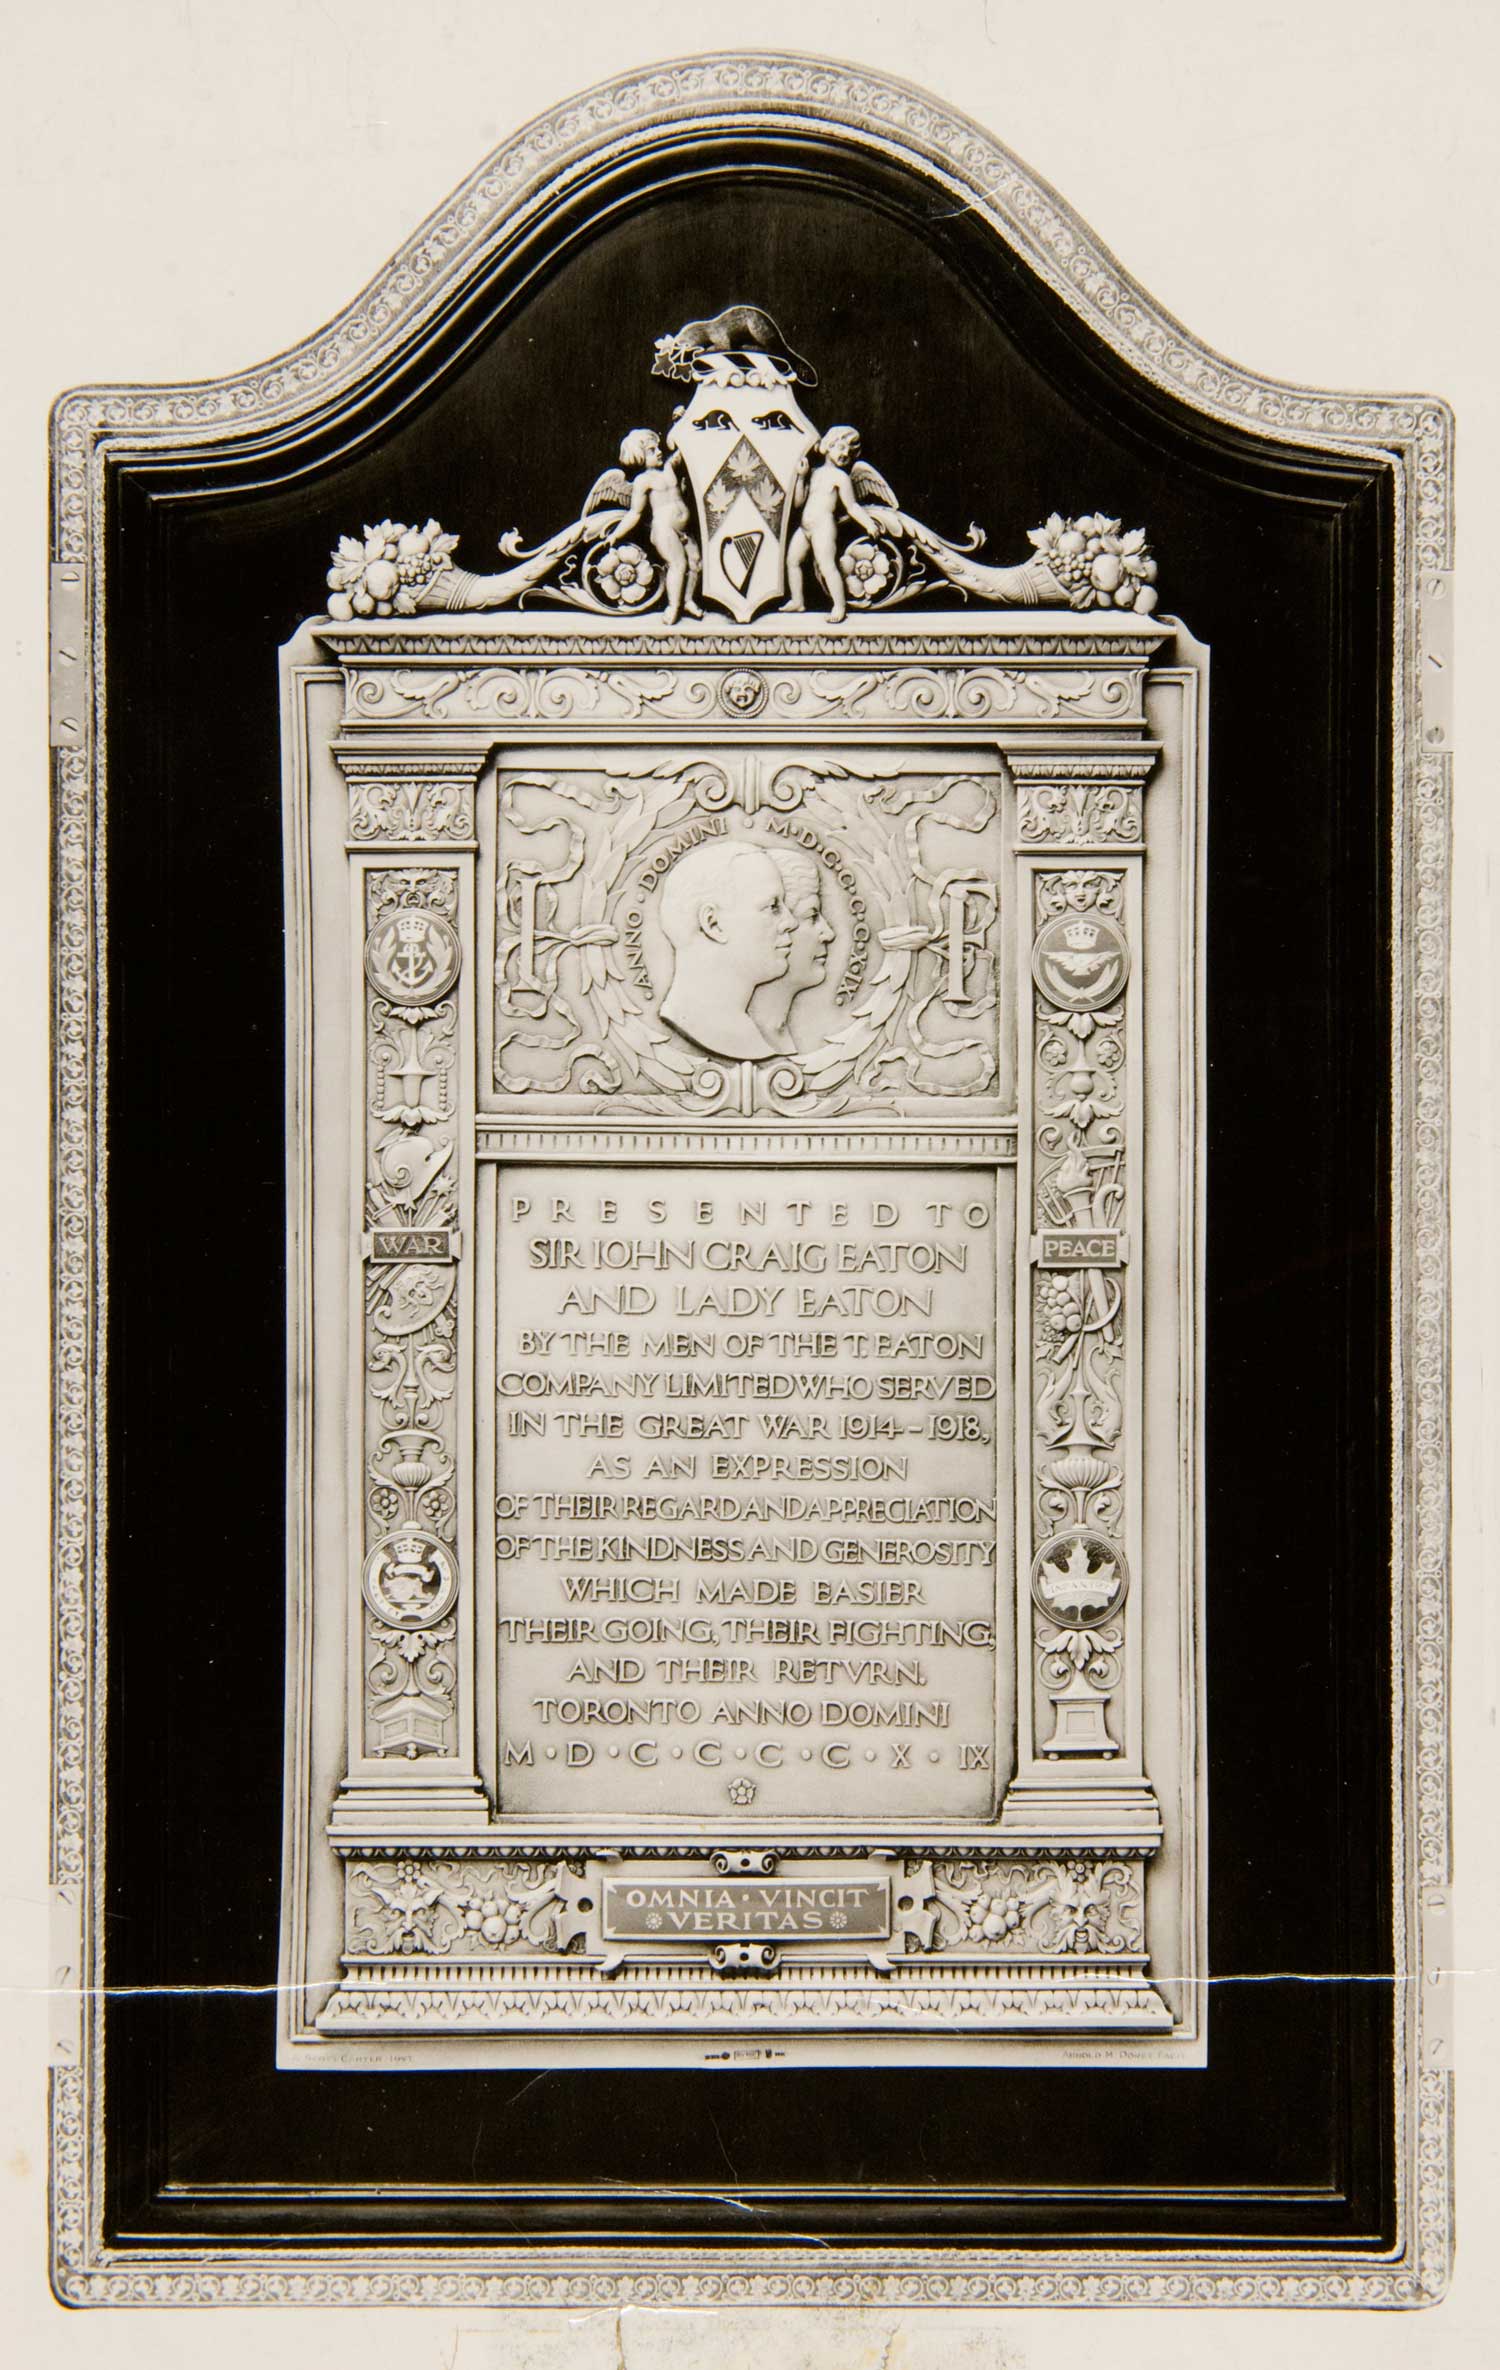 Memorial plaque dedicated to 